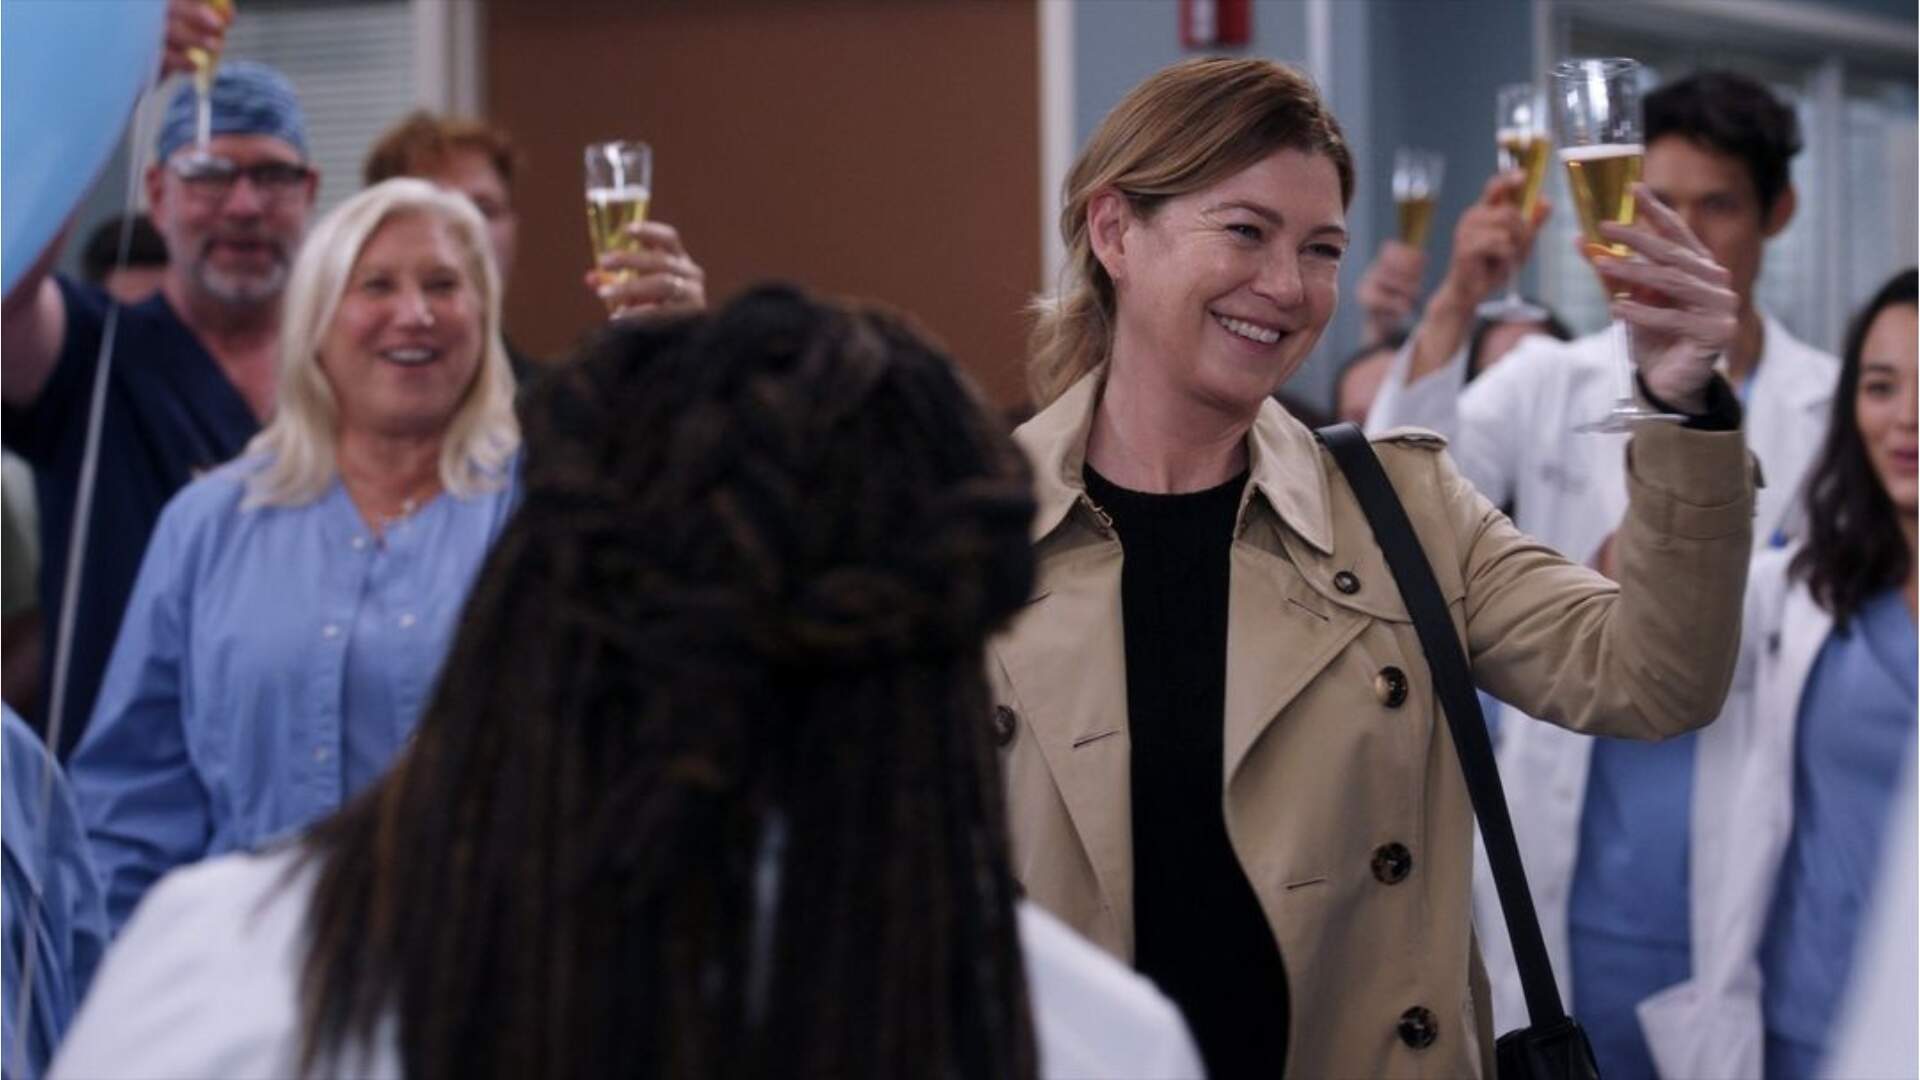 Grey’s Anatomy: “Último episódio” de Ellen Pompeo como Meredith Grey frustra fãs; confira - Metropolitana FM